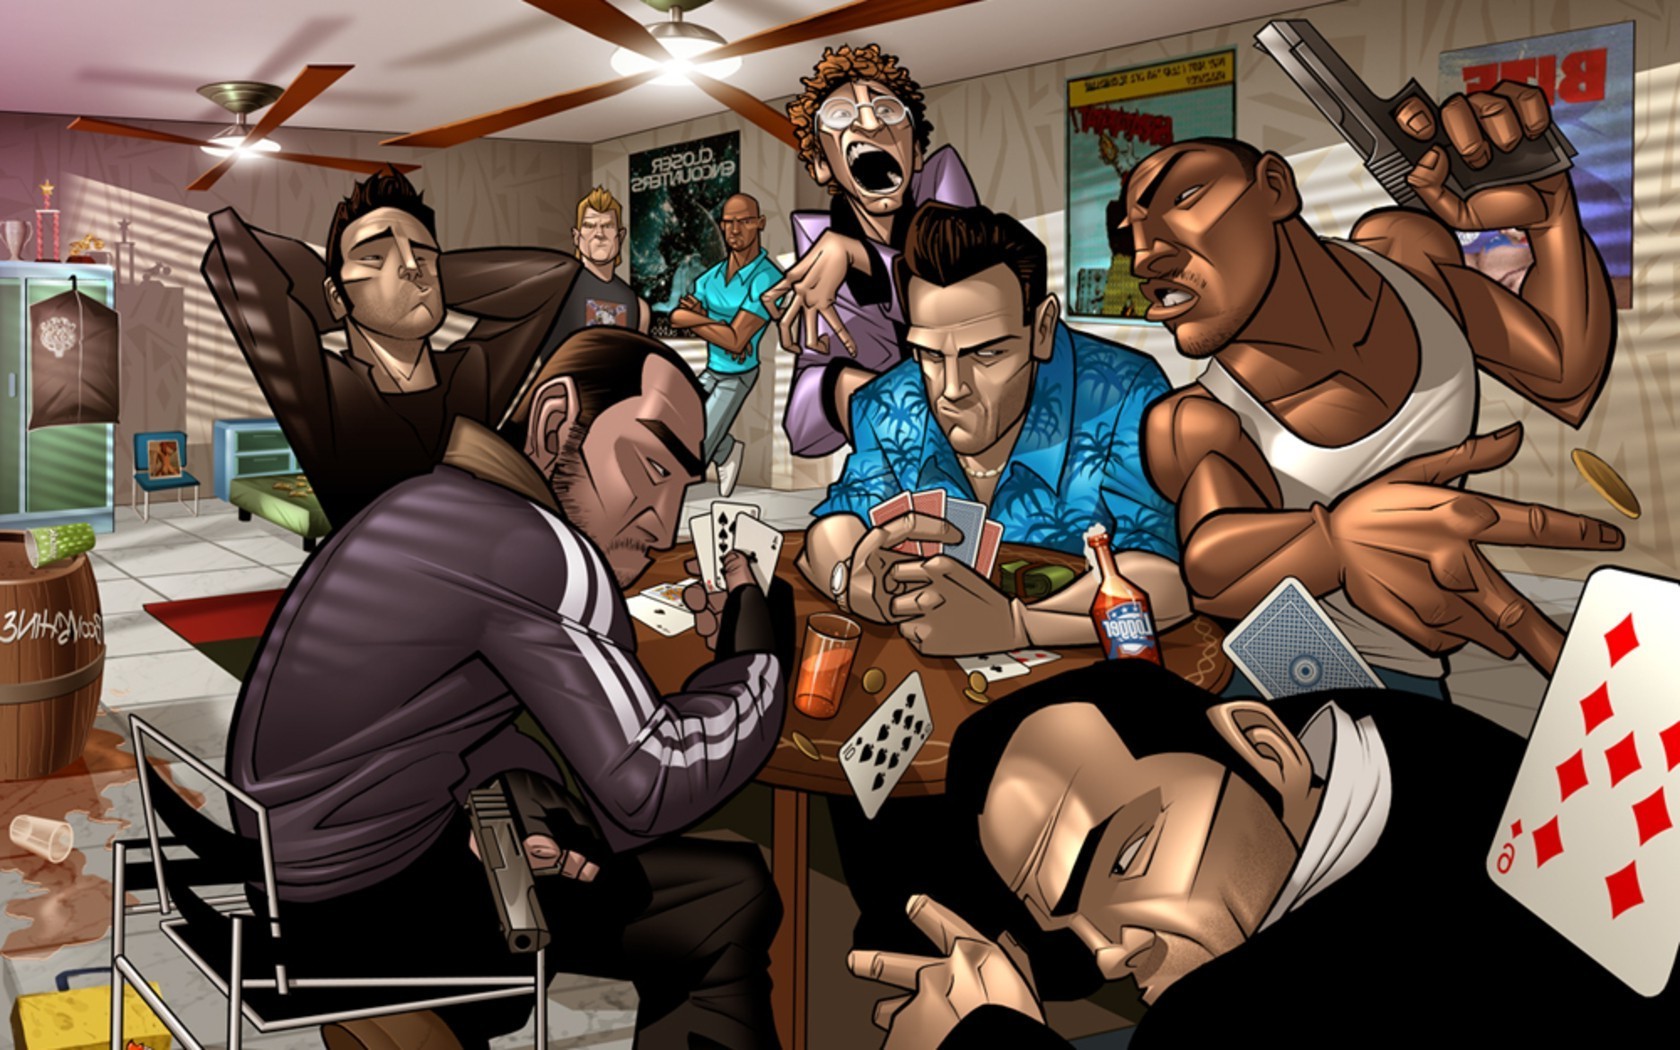 Grand Theft Auto Wallpaper